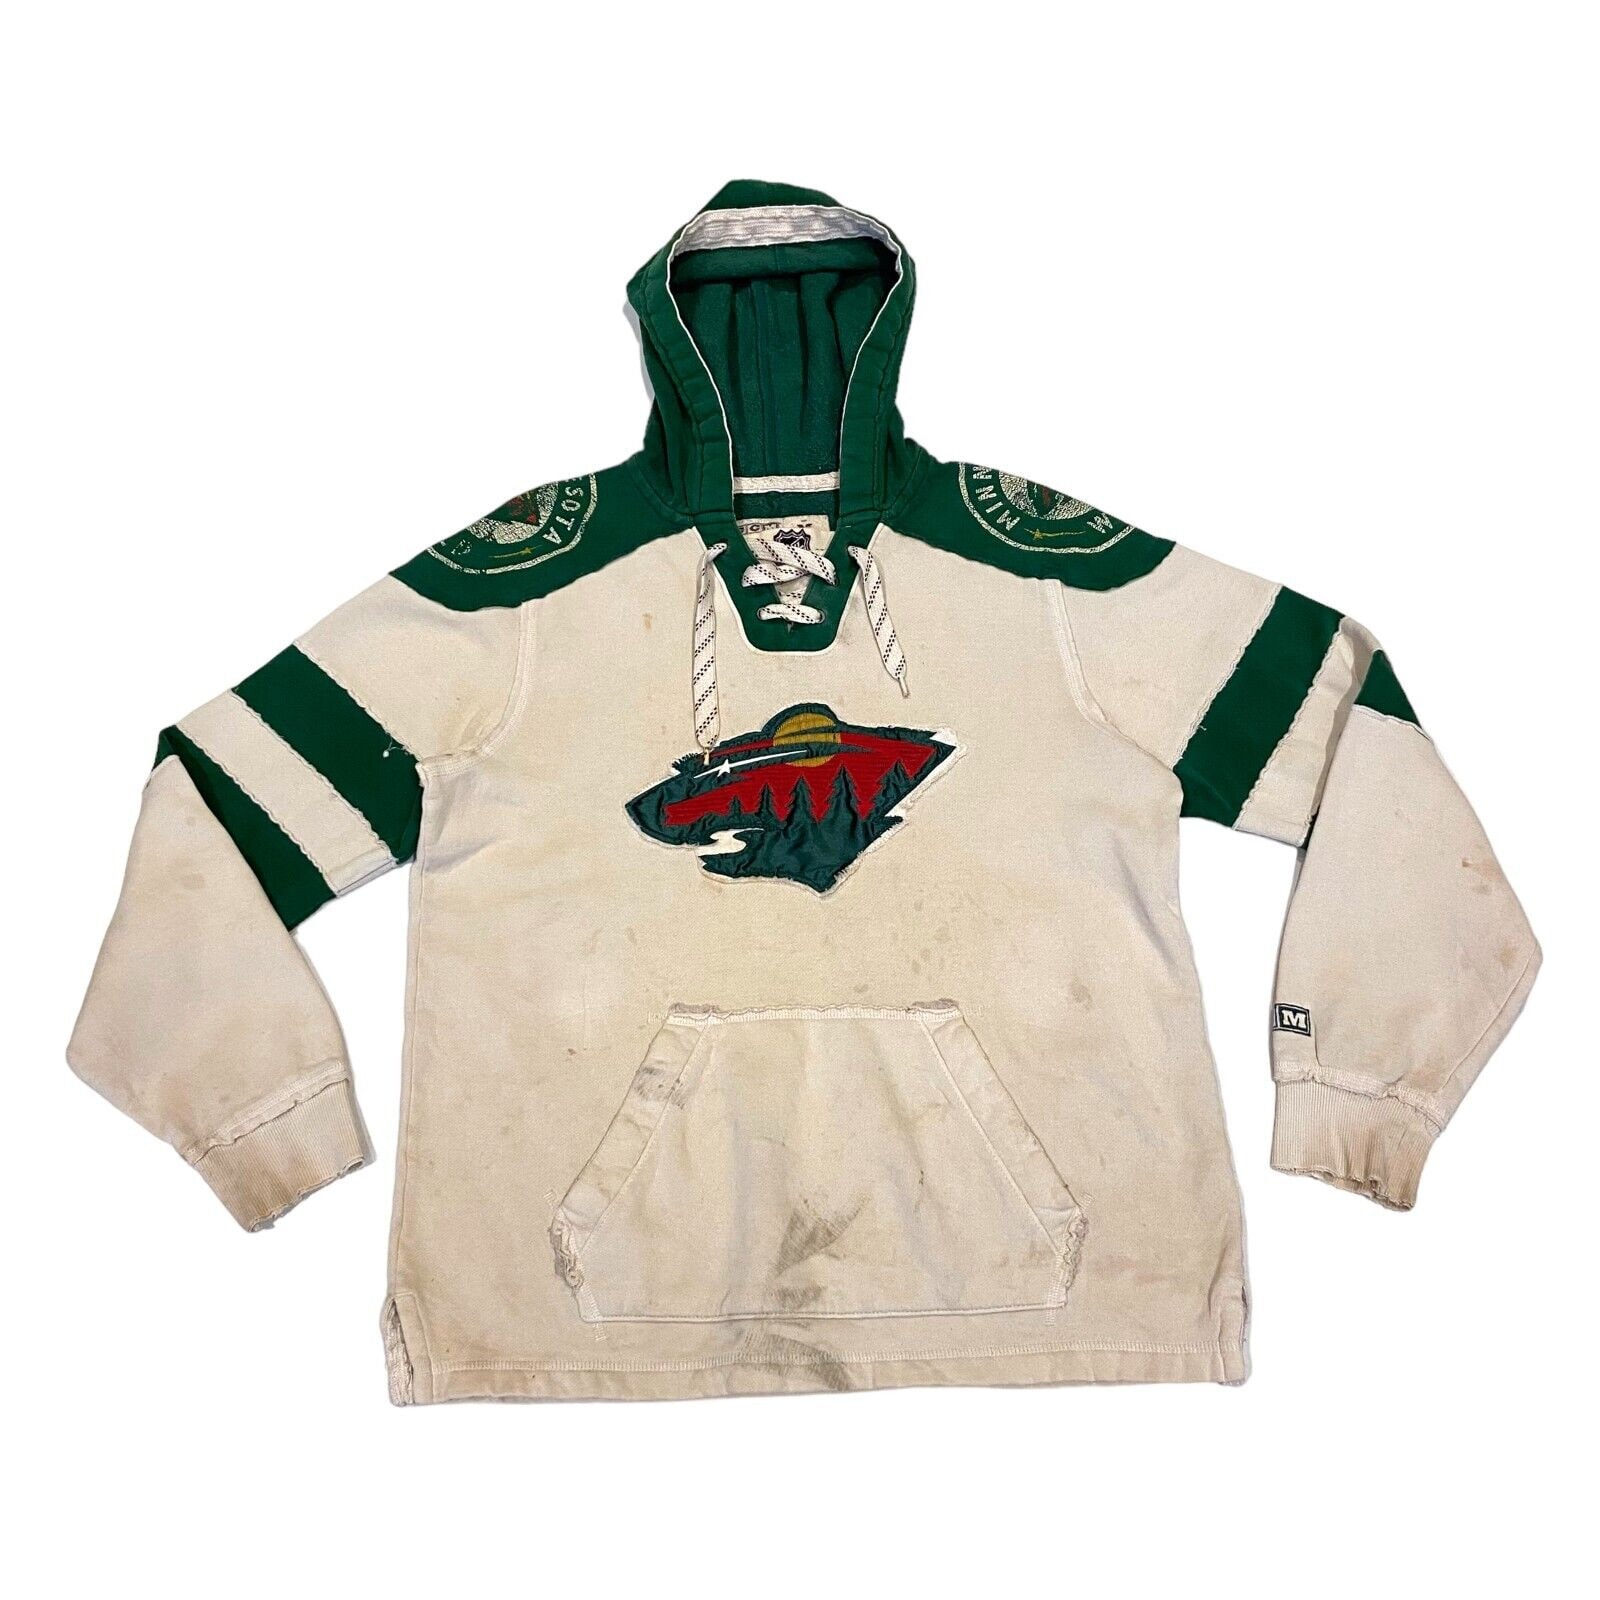 Kirill Kaprizov Minnesota Wild Hockey Hoodie Green New Men's XL Sweatshirt